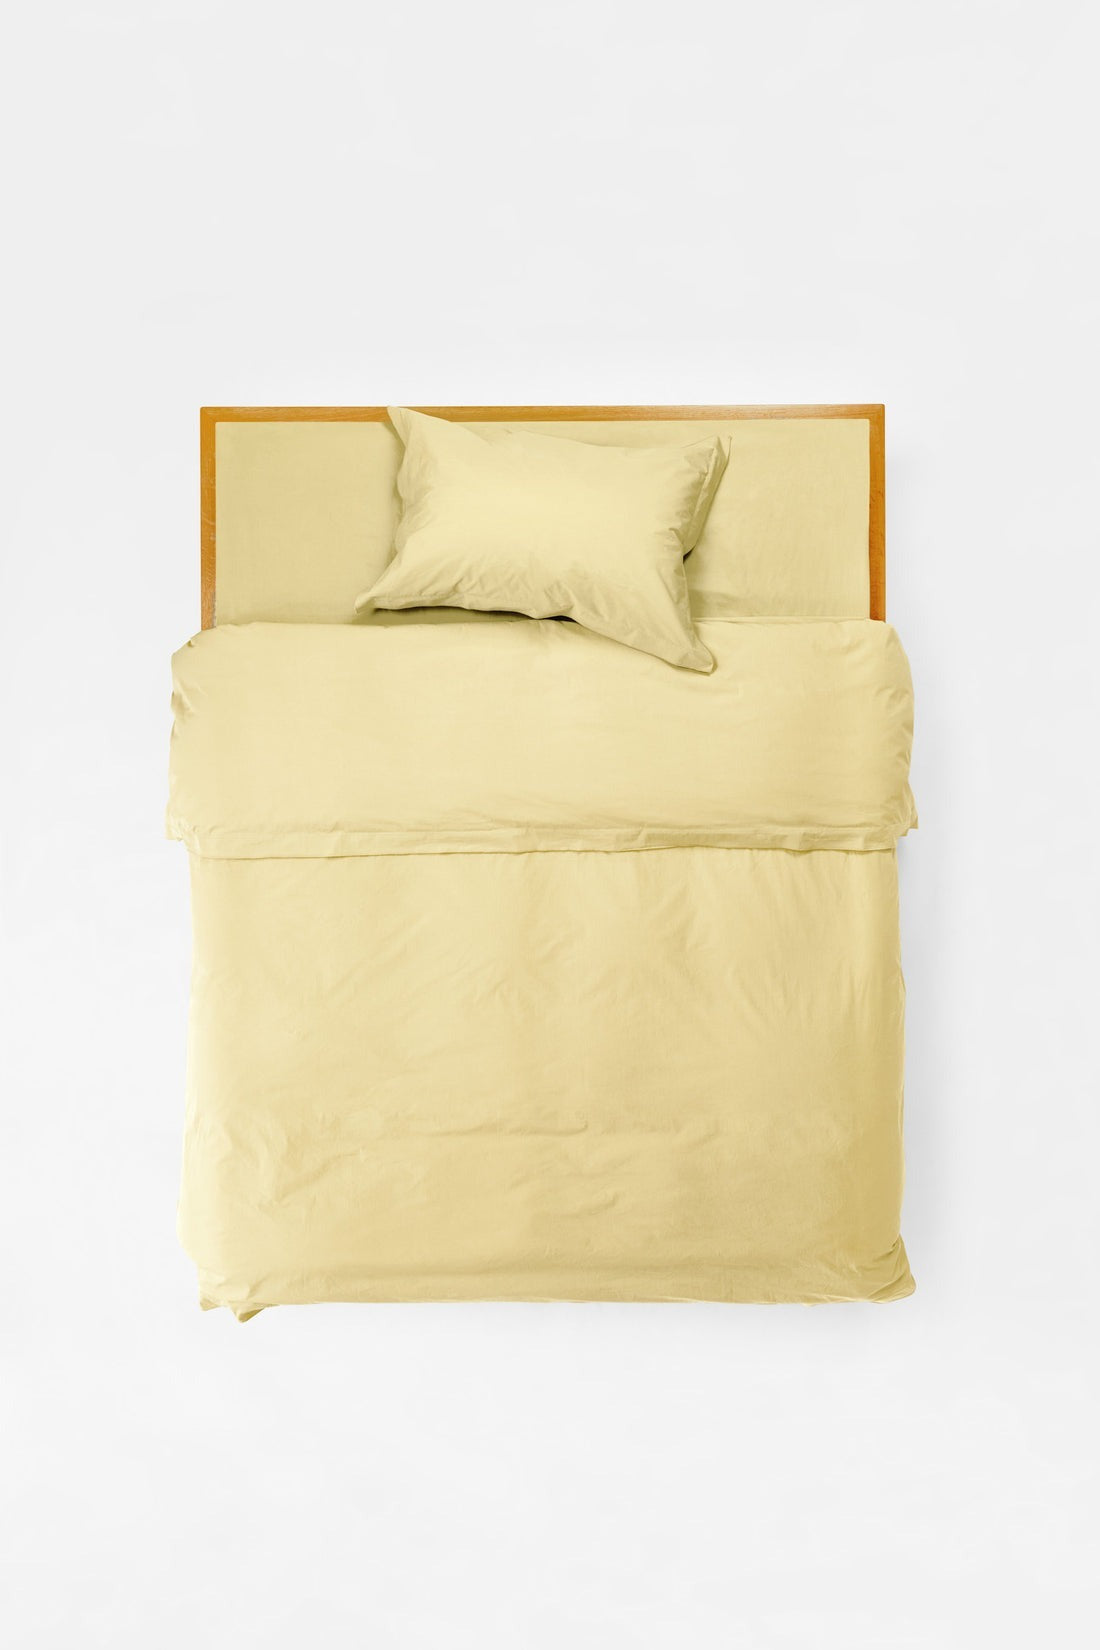 Mono Organic Cotton Percale Pillow Pair - Maize Pillows in King Pillow